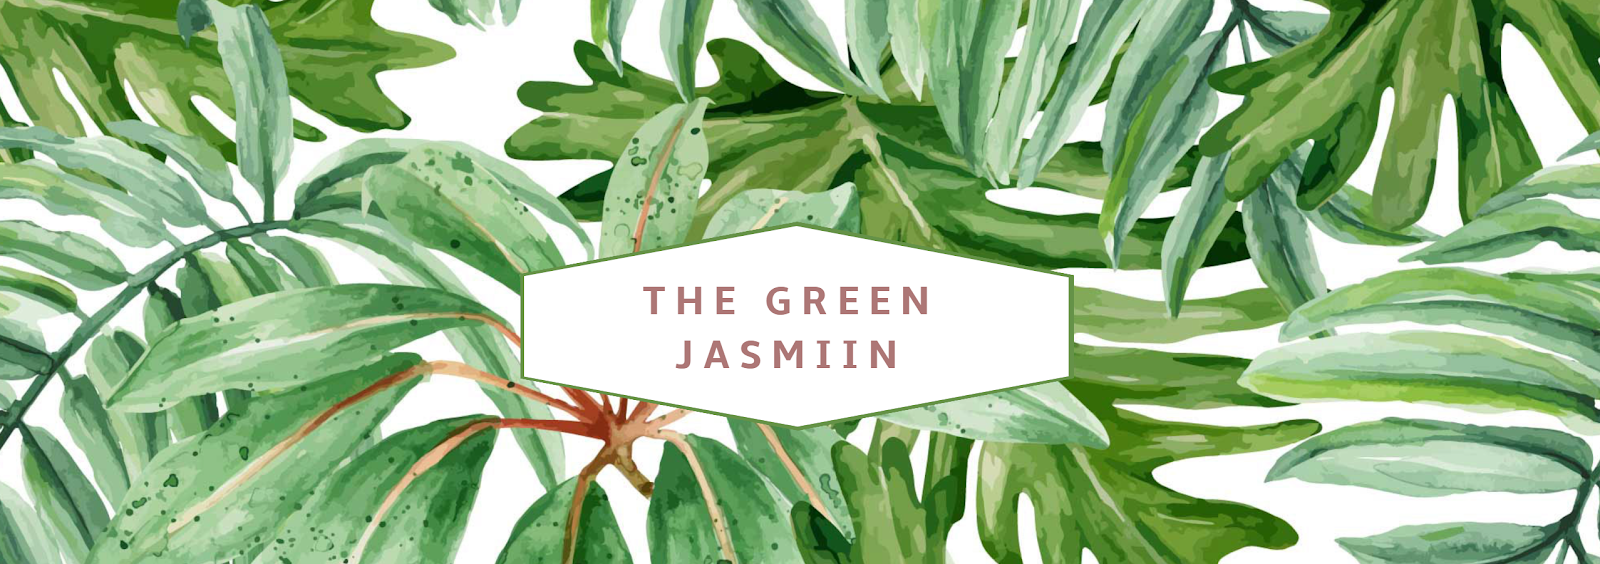 THE GREEN JASMIN